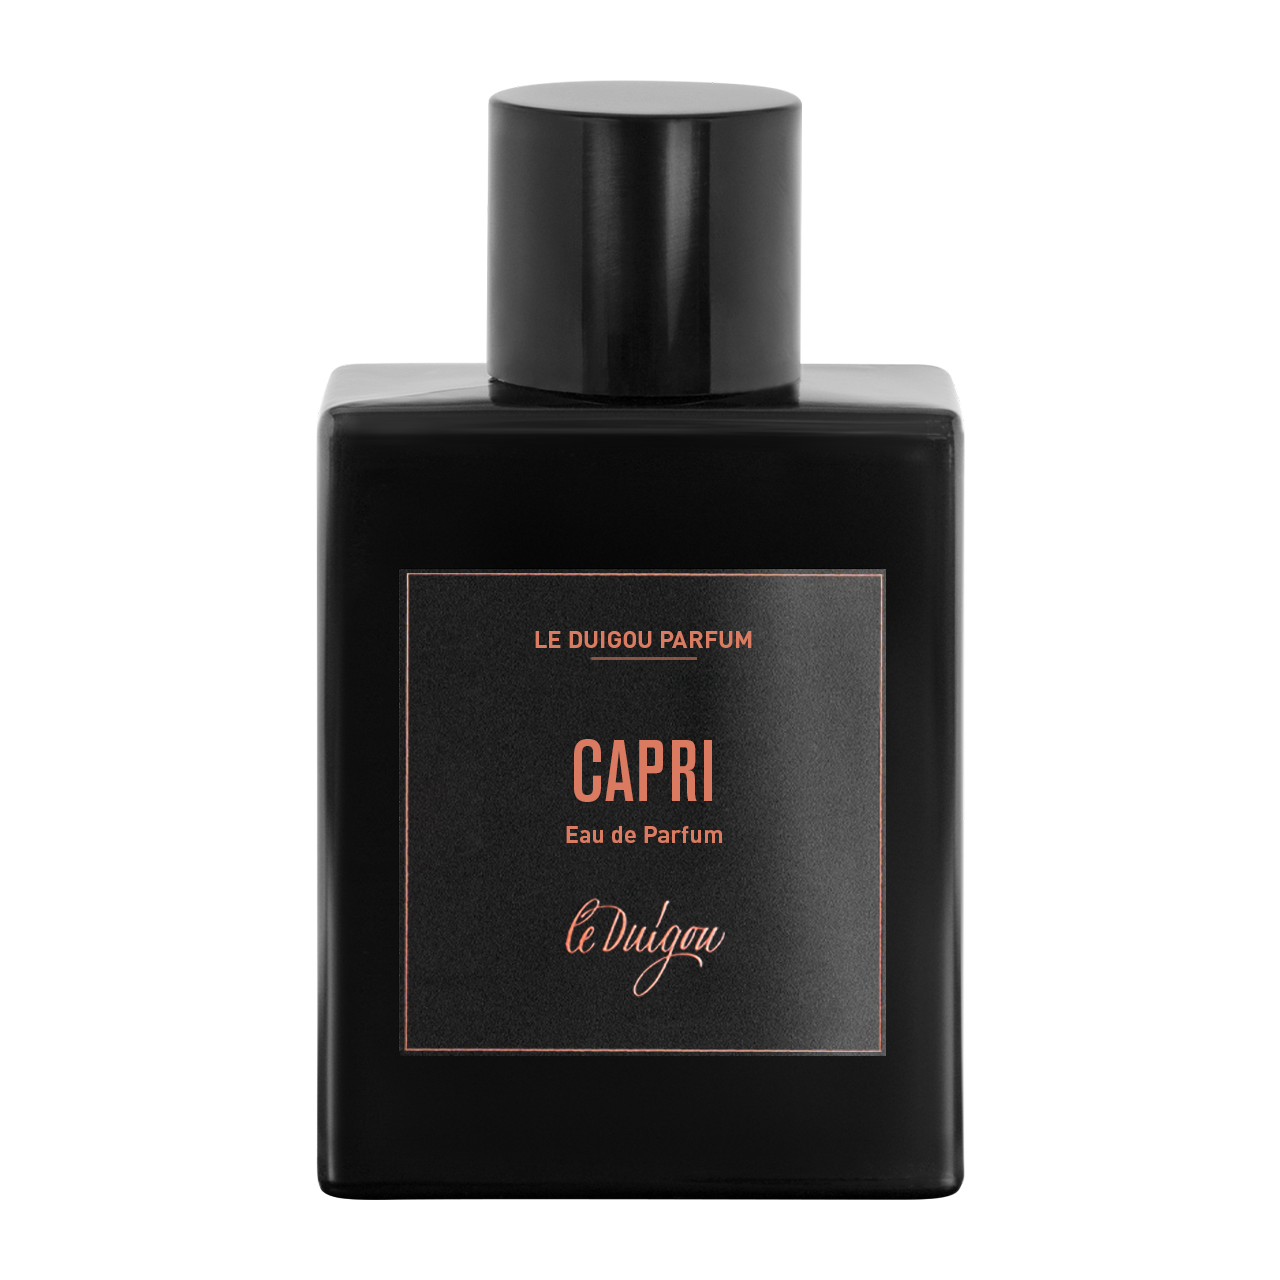 Perfume CAPRI EdP 75ml